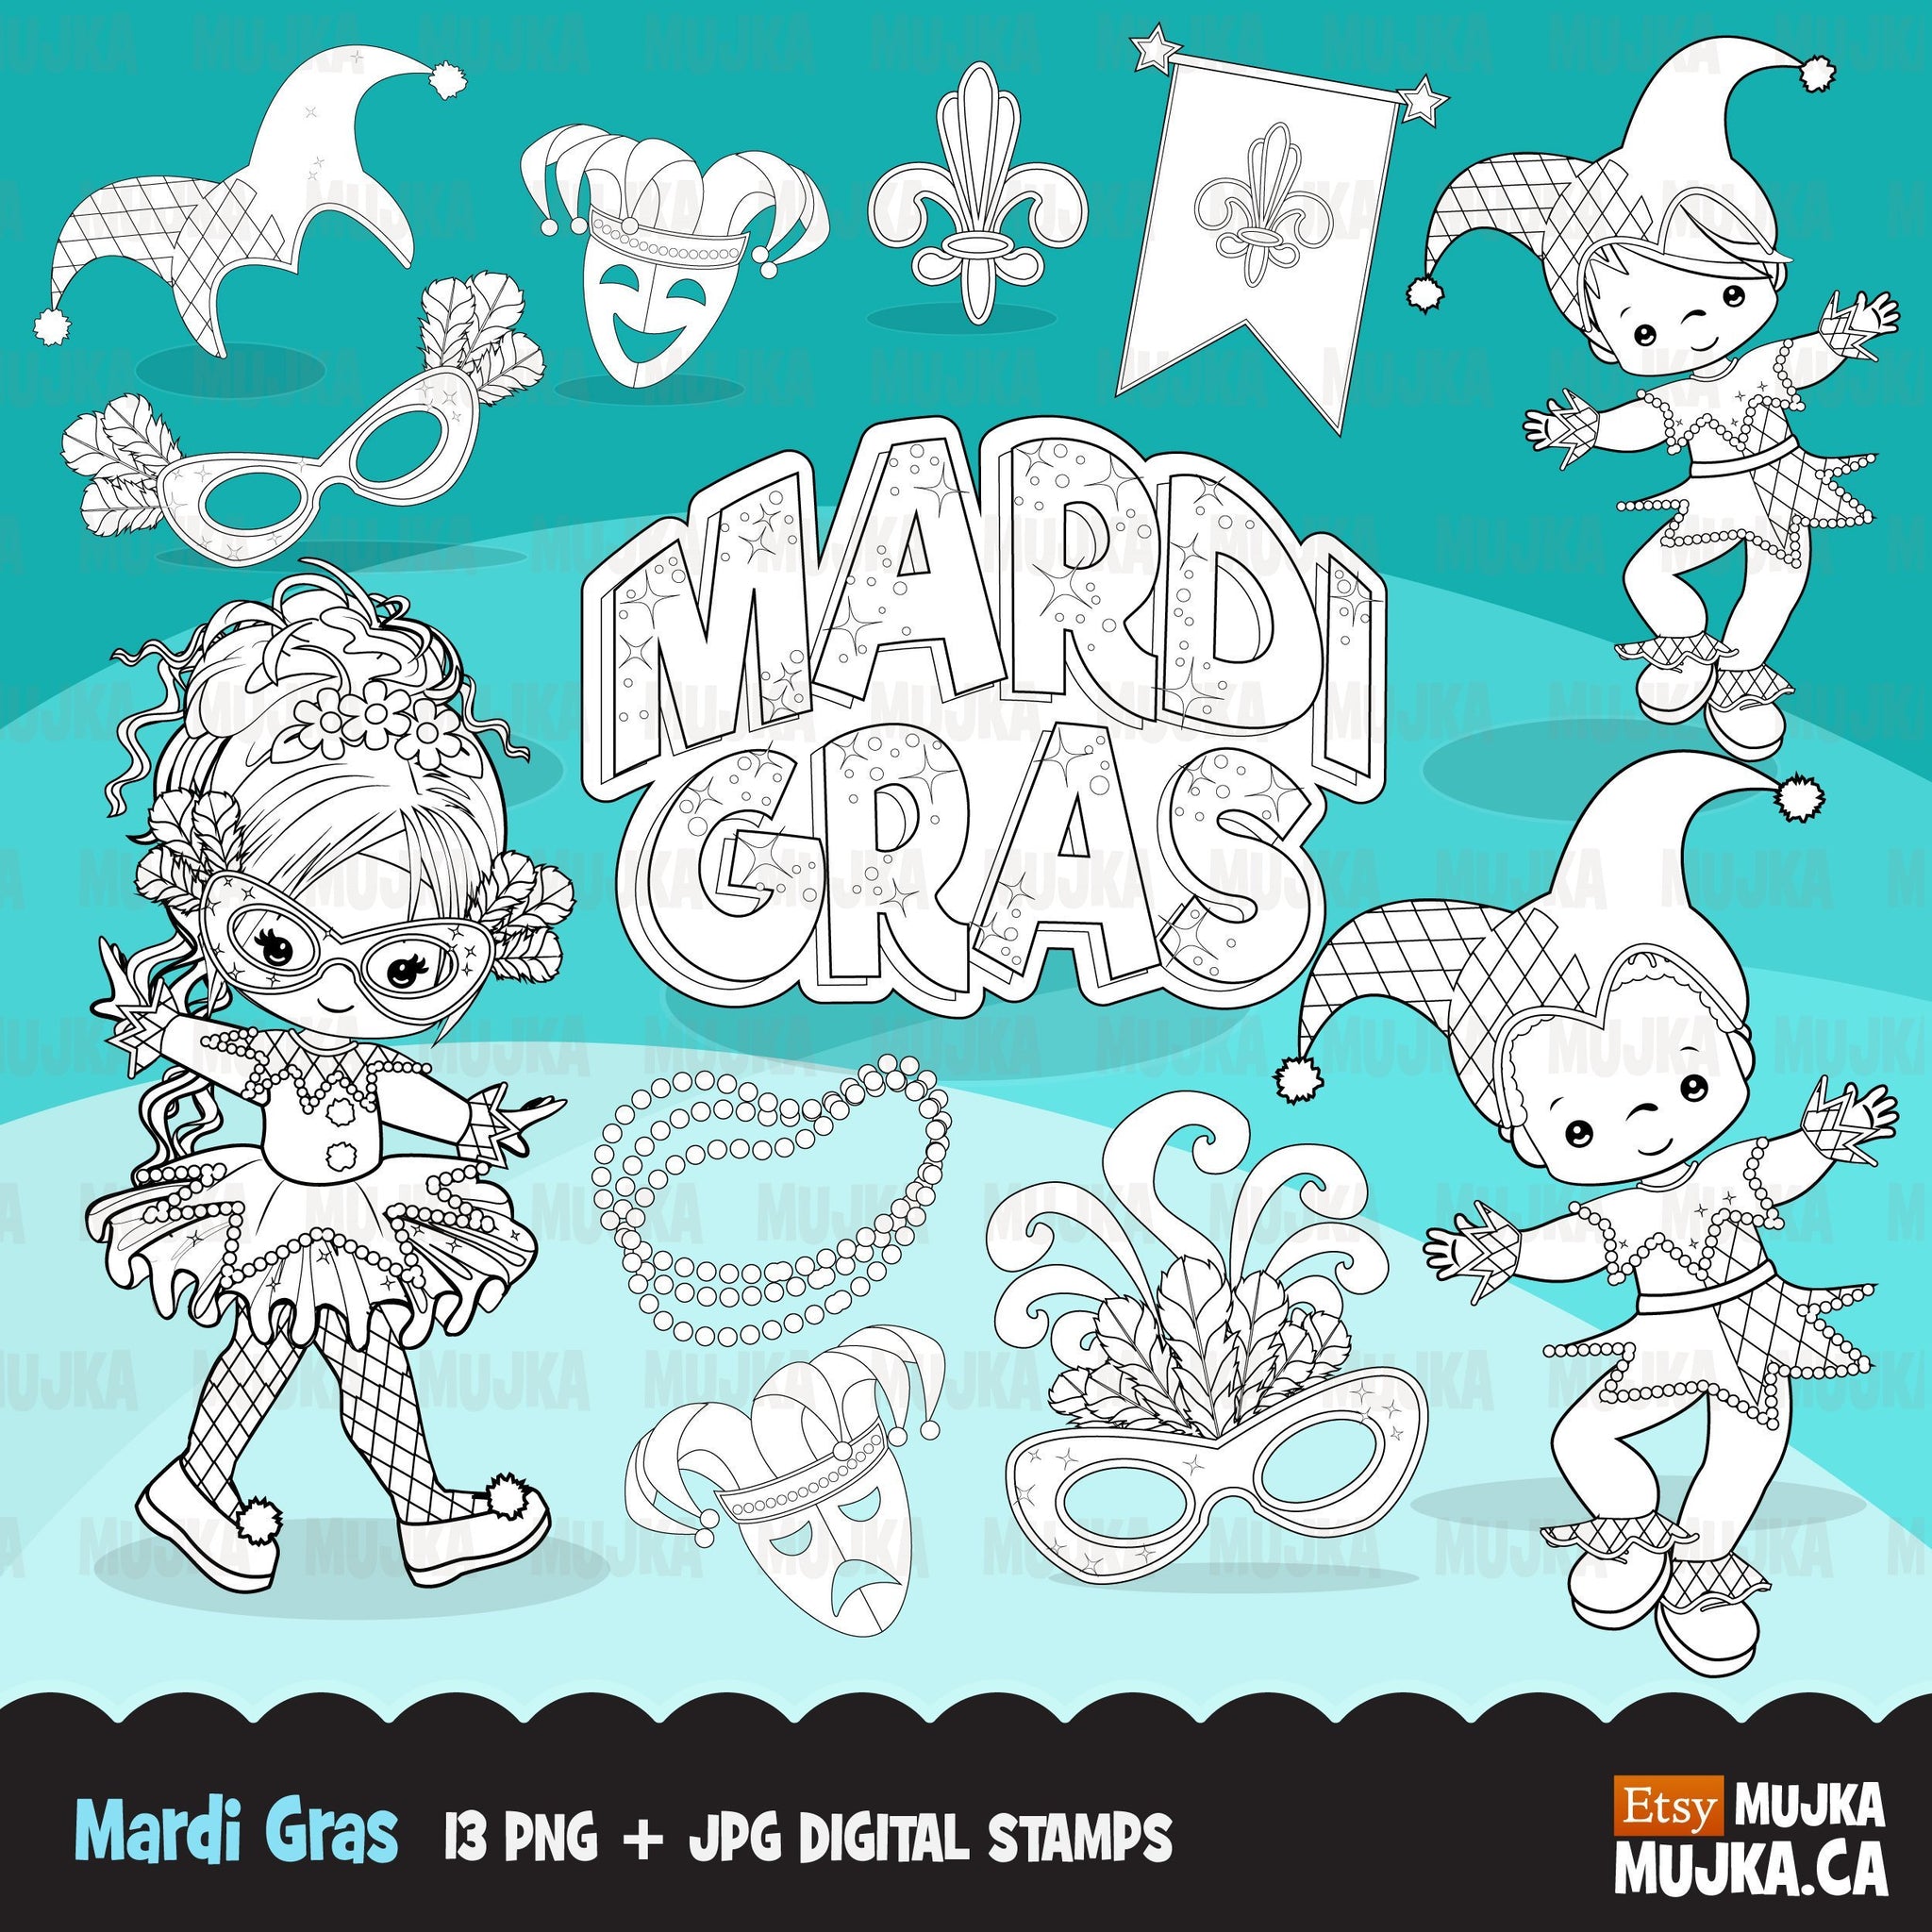 Mardi gras digital stamps, girl and boy